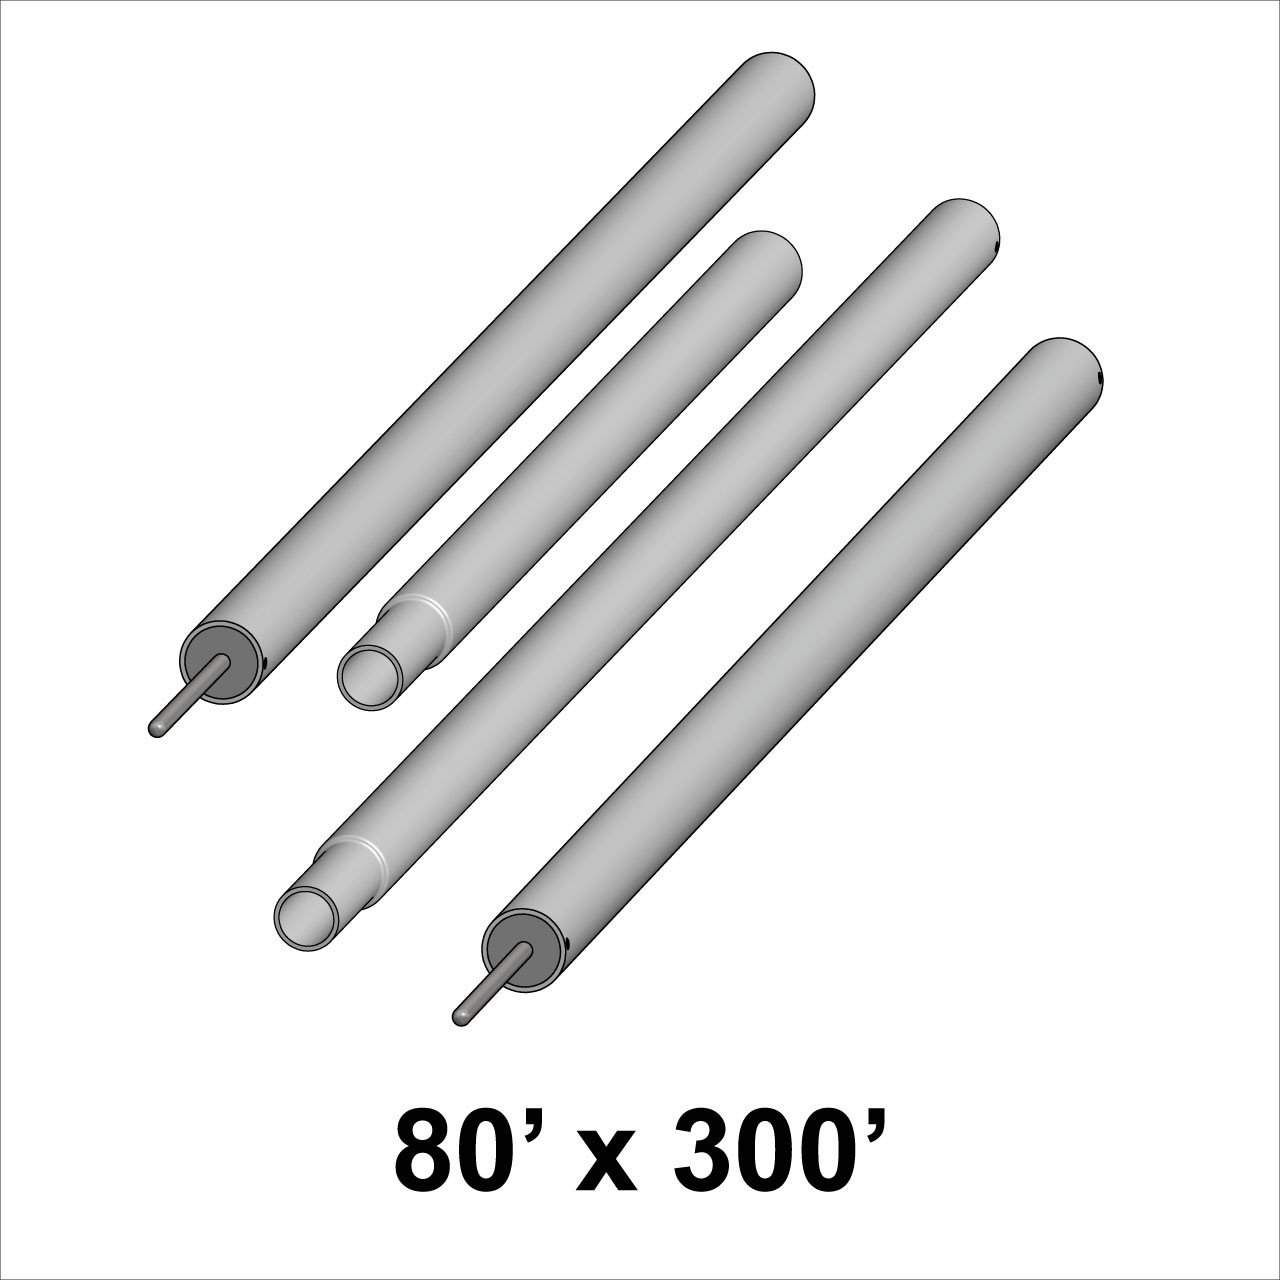 80' x 300' Classic Series Pole Kit